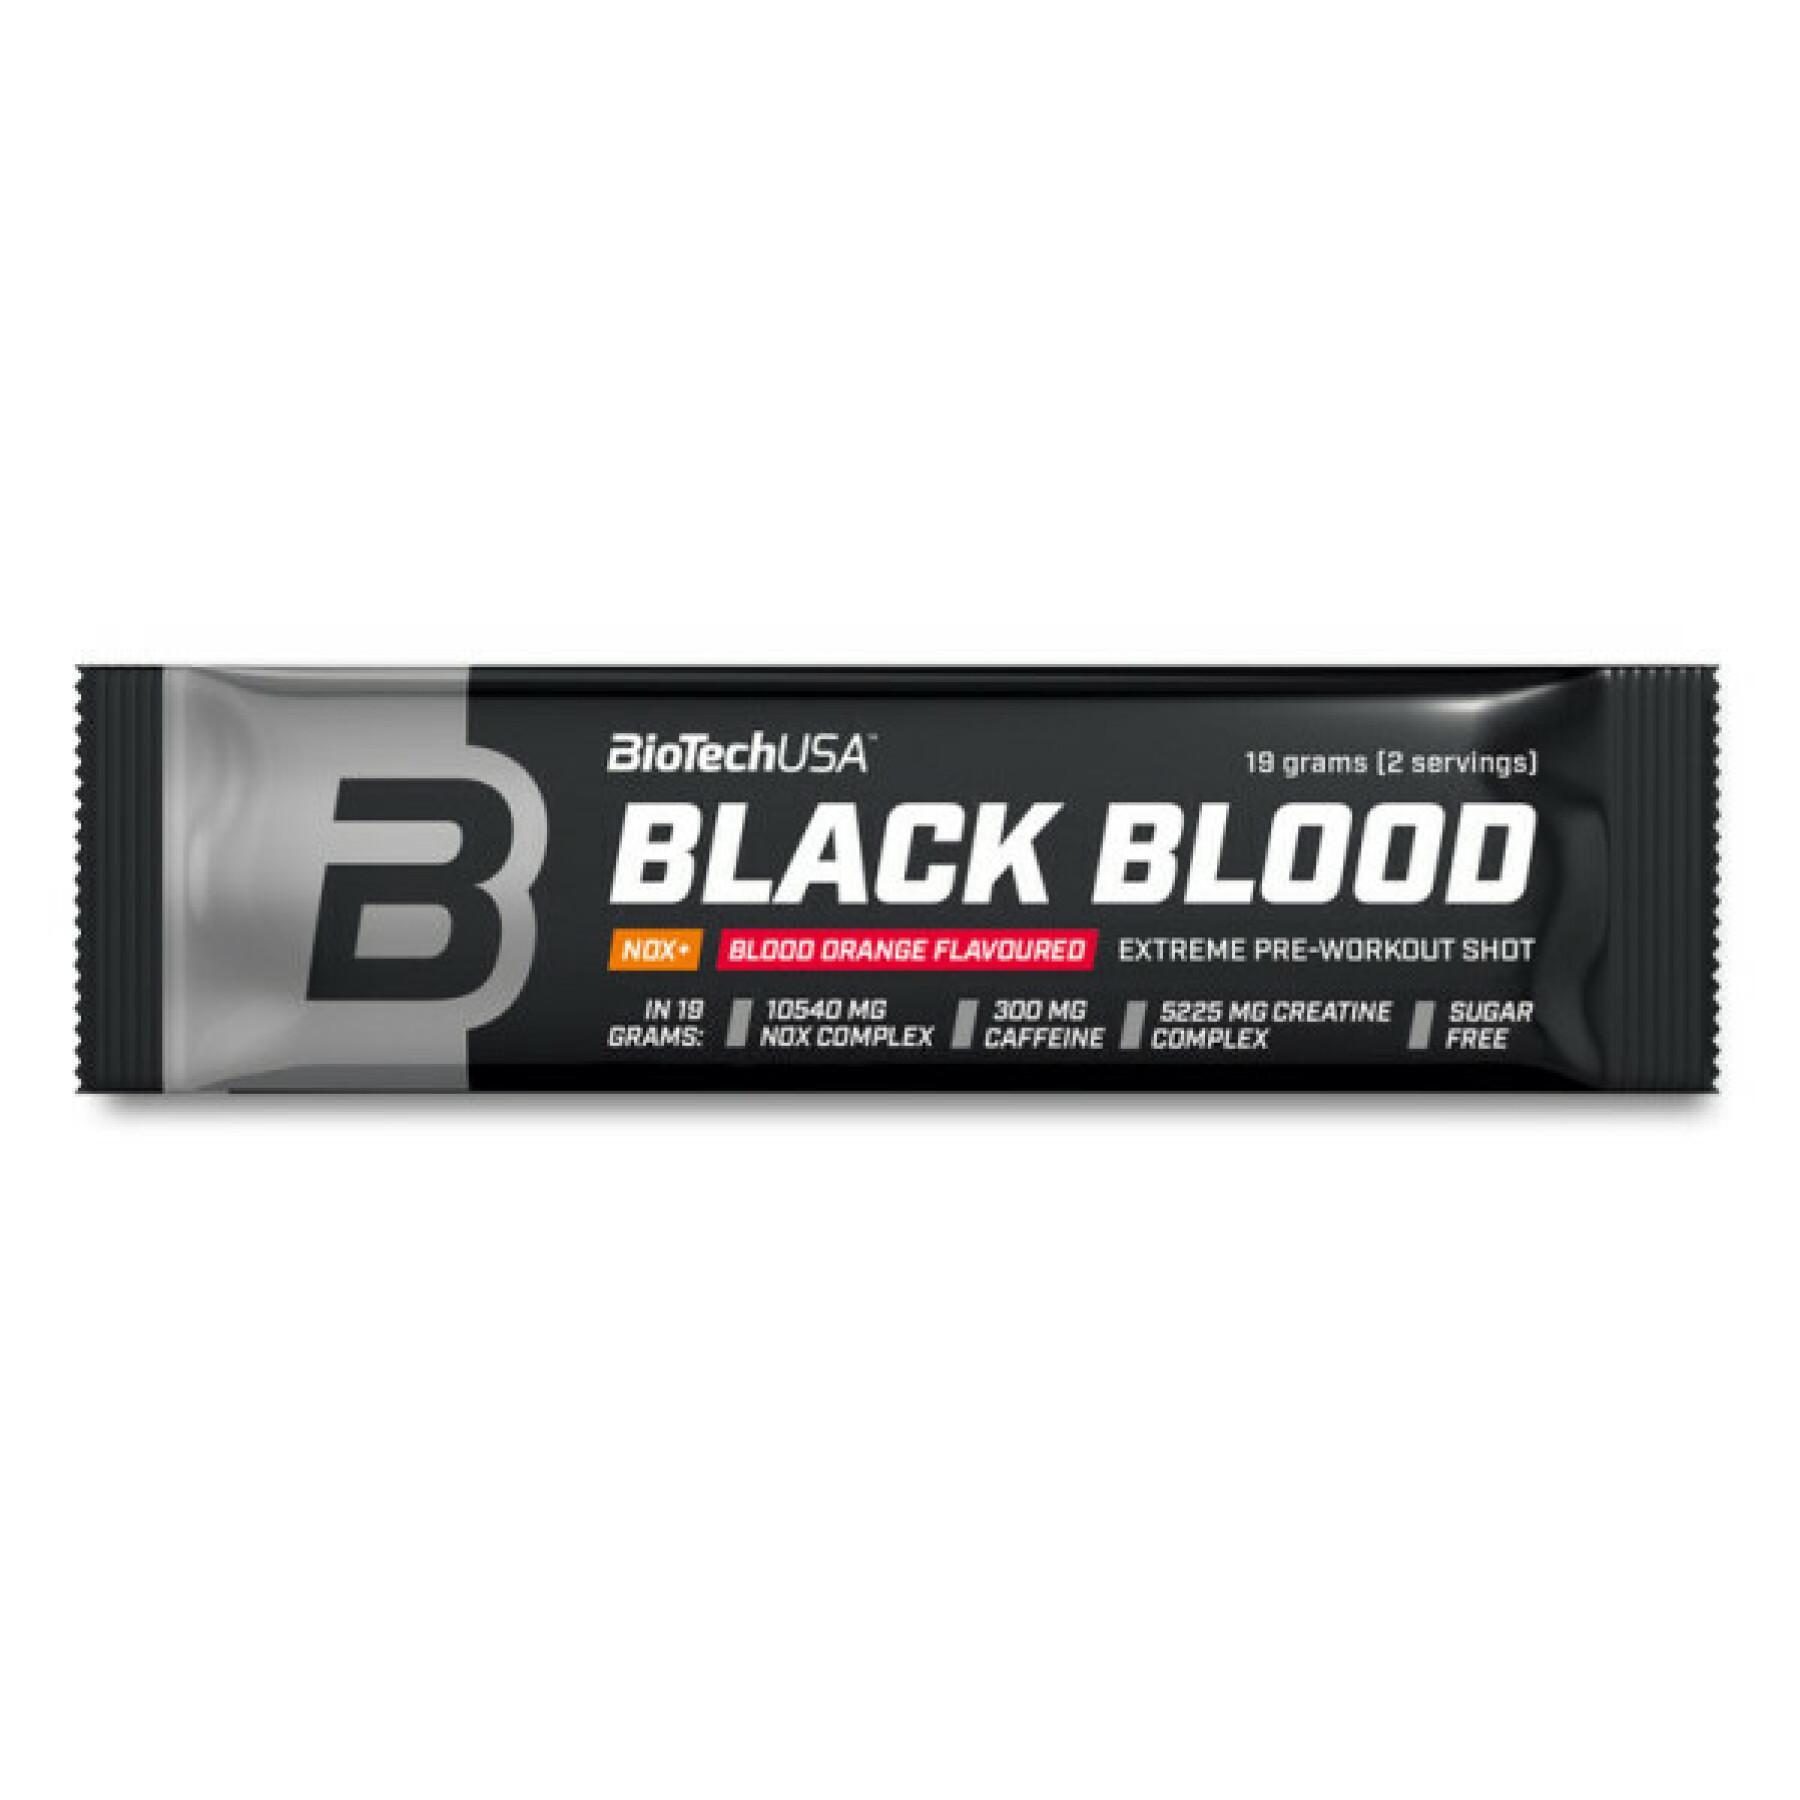 Set van 50 boosterpacks Biotech USA black blood nox + - Orange sanguine - 19g